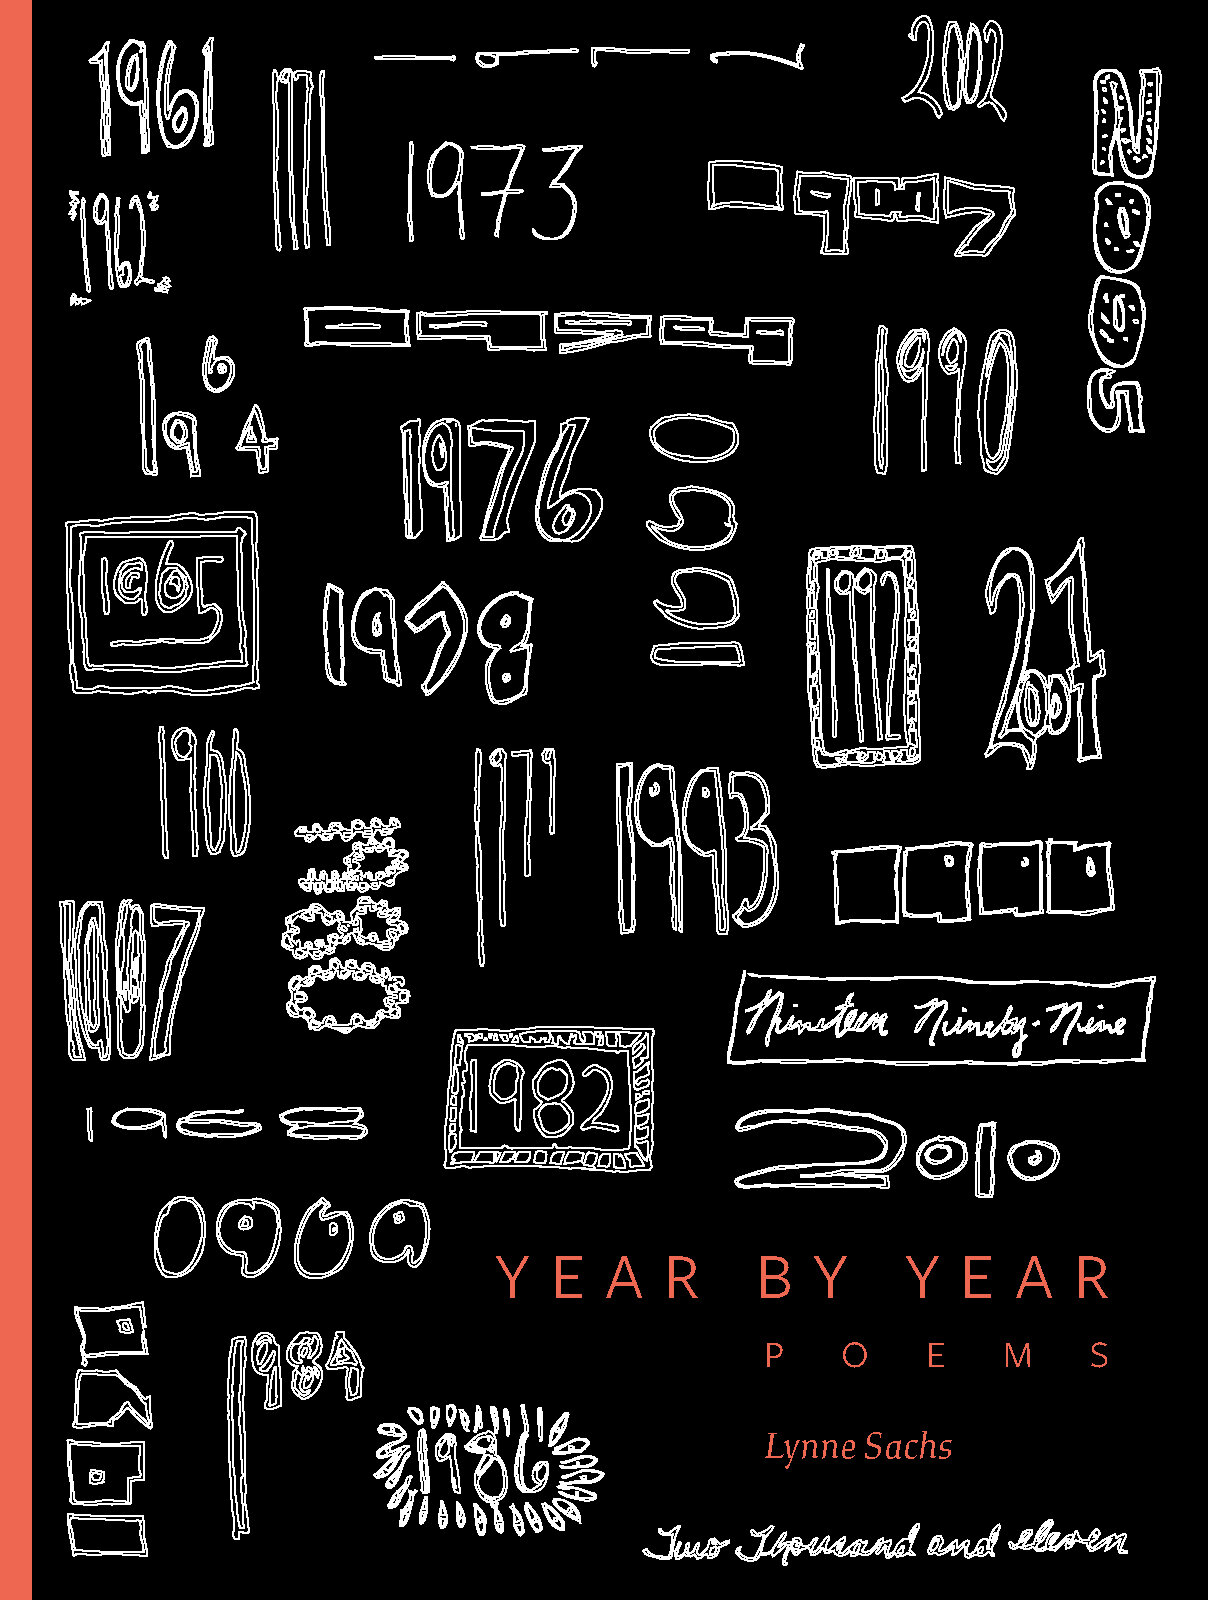 Year by Year Poems by Lynne Sachs